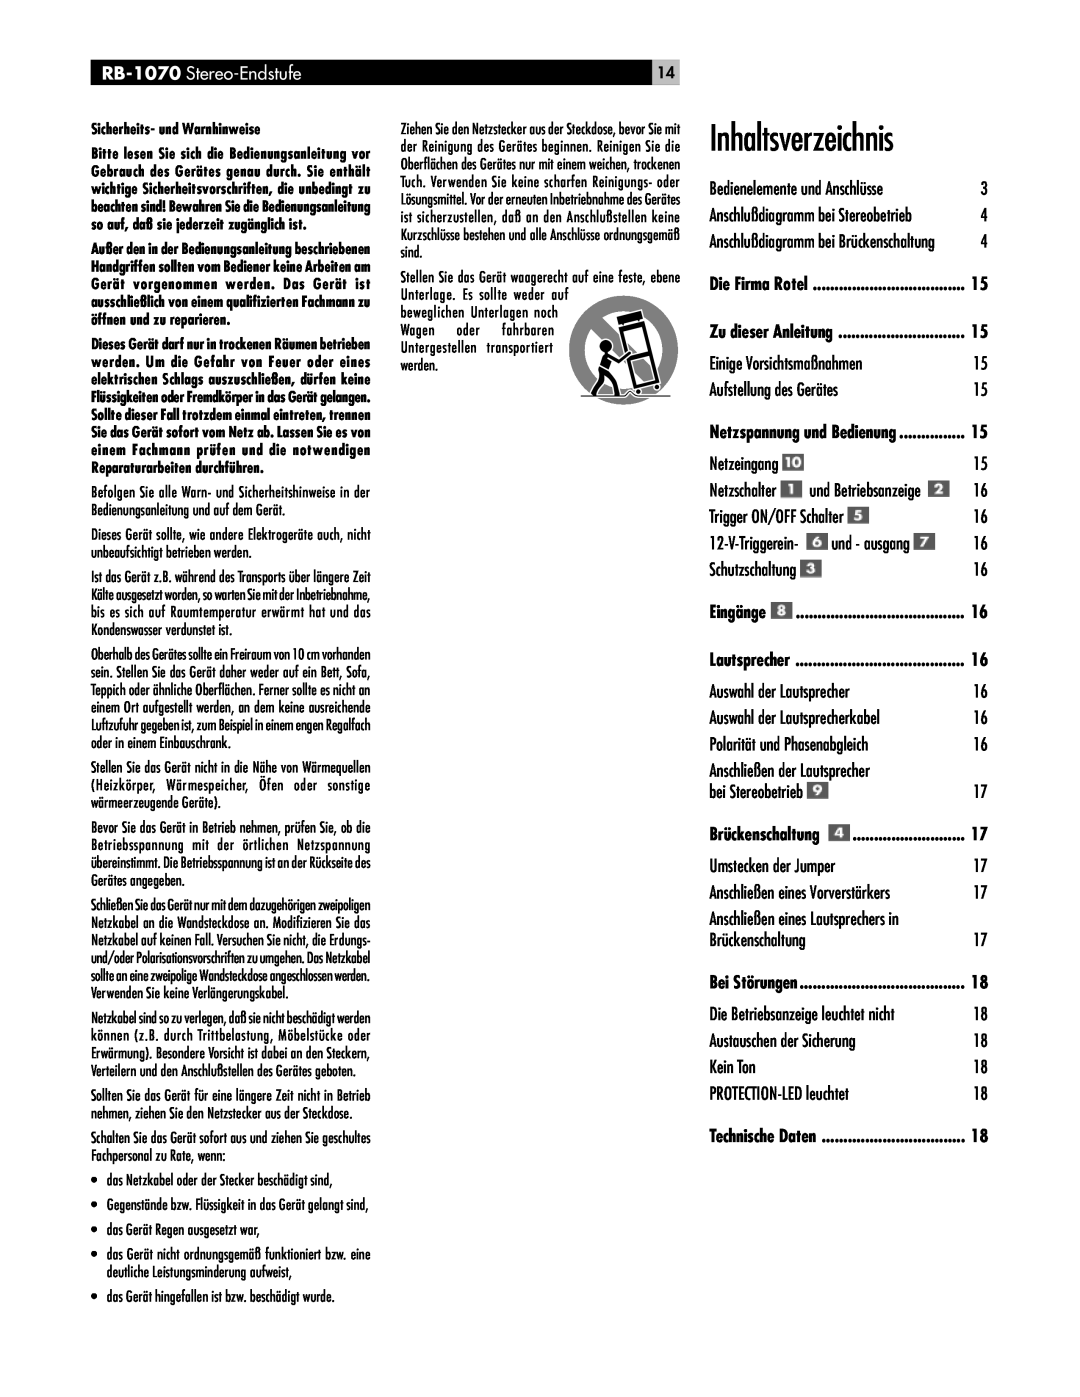 Rotel owner manual Inhaltsverzeichnis, RB-1070 Stereo-Endstufe 